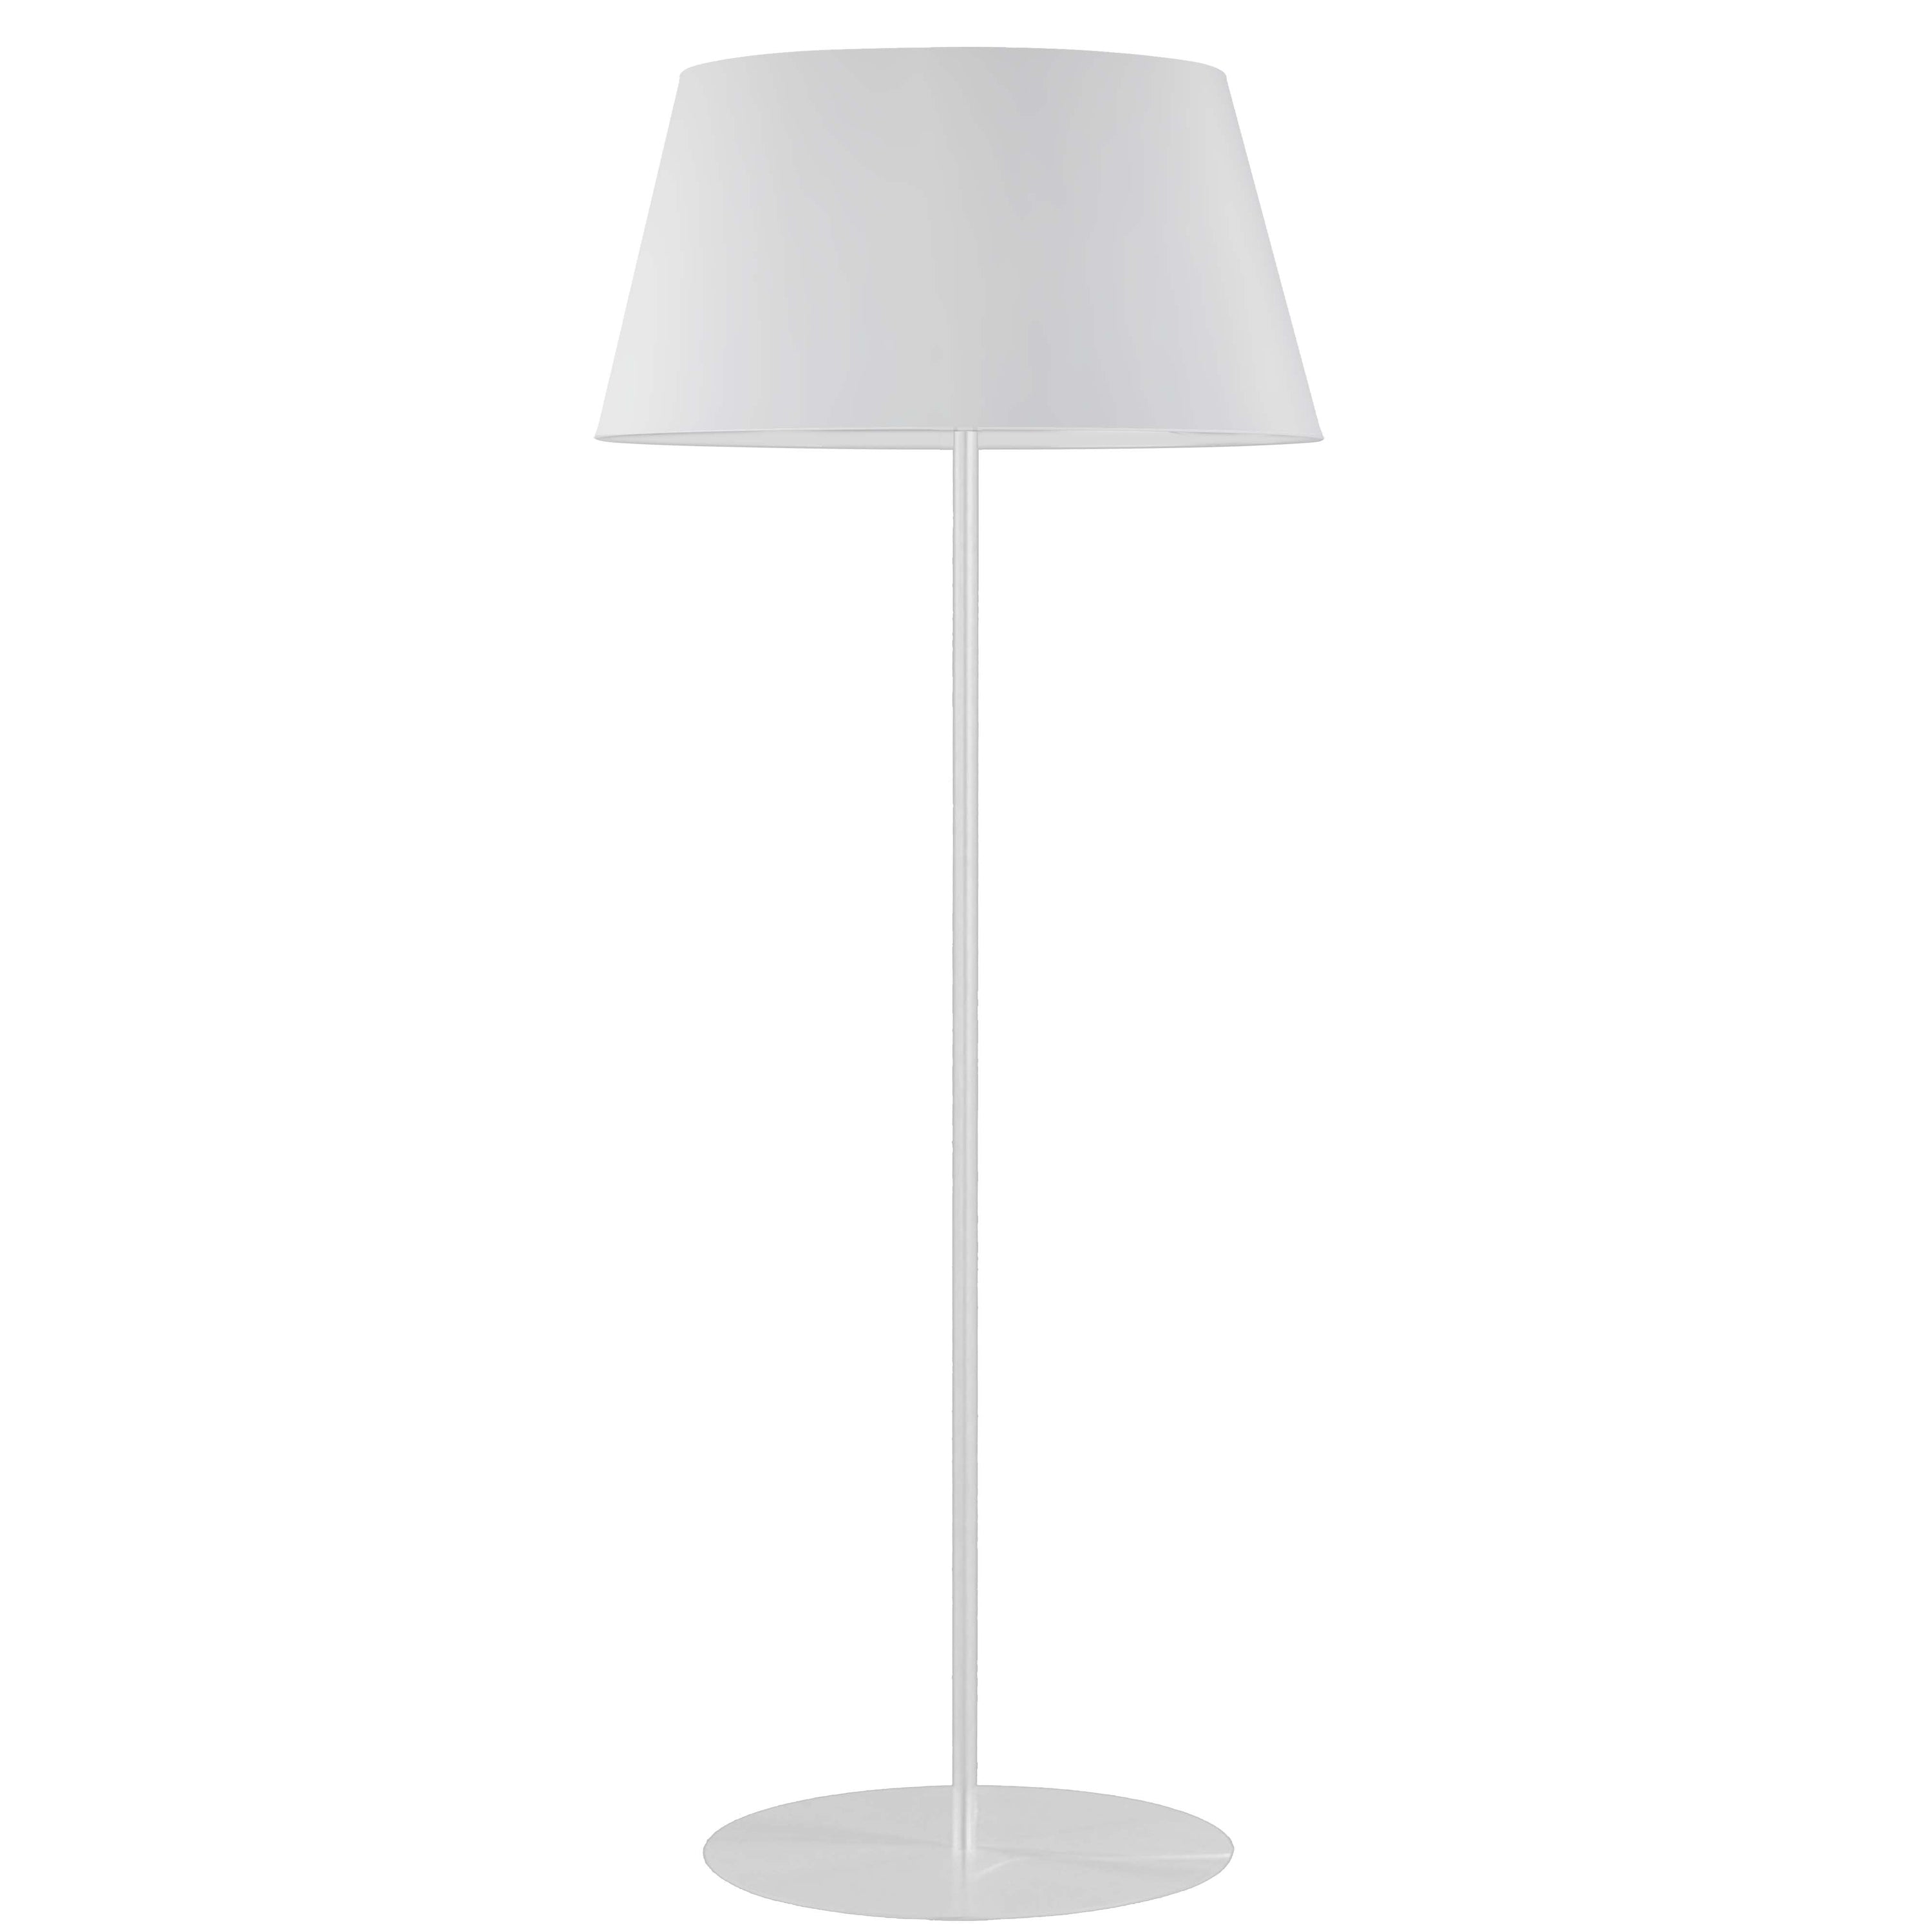 Dainolite GTC-R631F-MW-WH 1 Light Incandescent Round Base Floor Lamp Matte White with White Shade